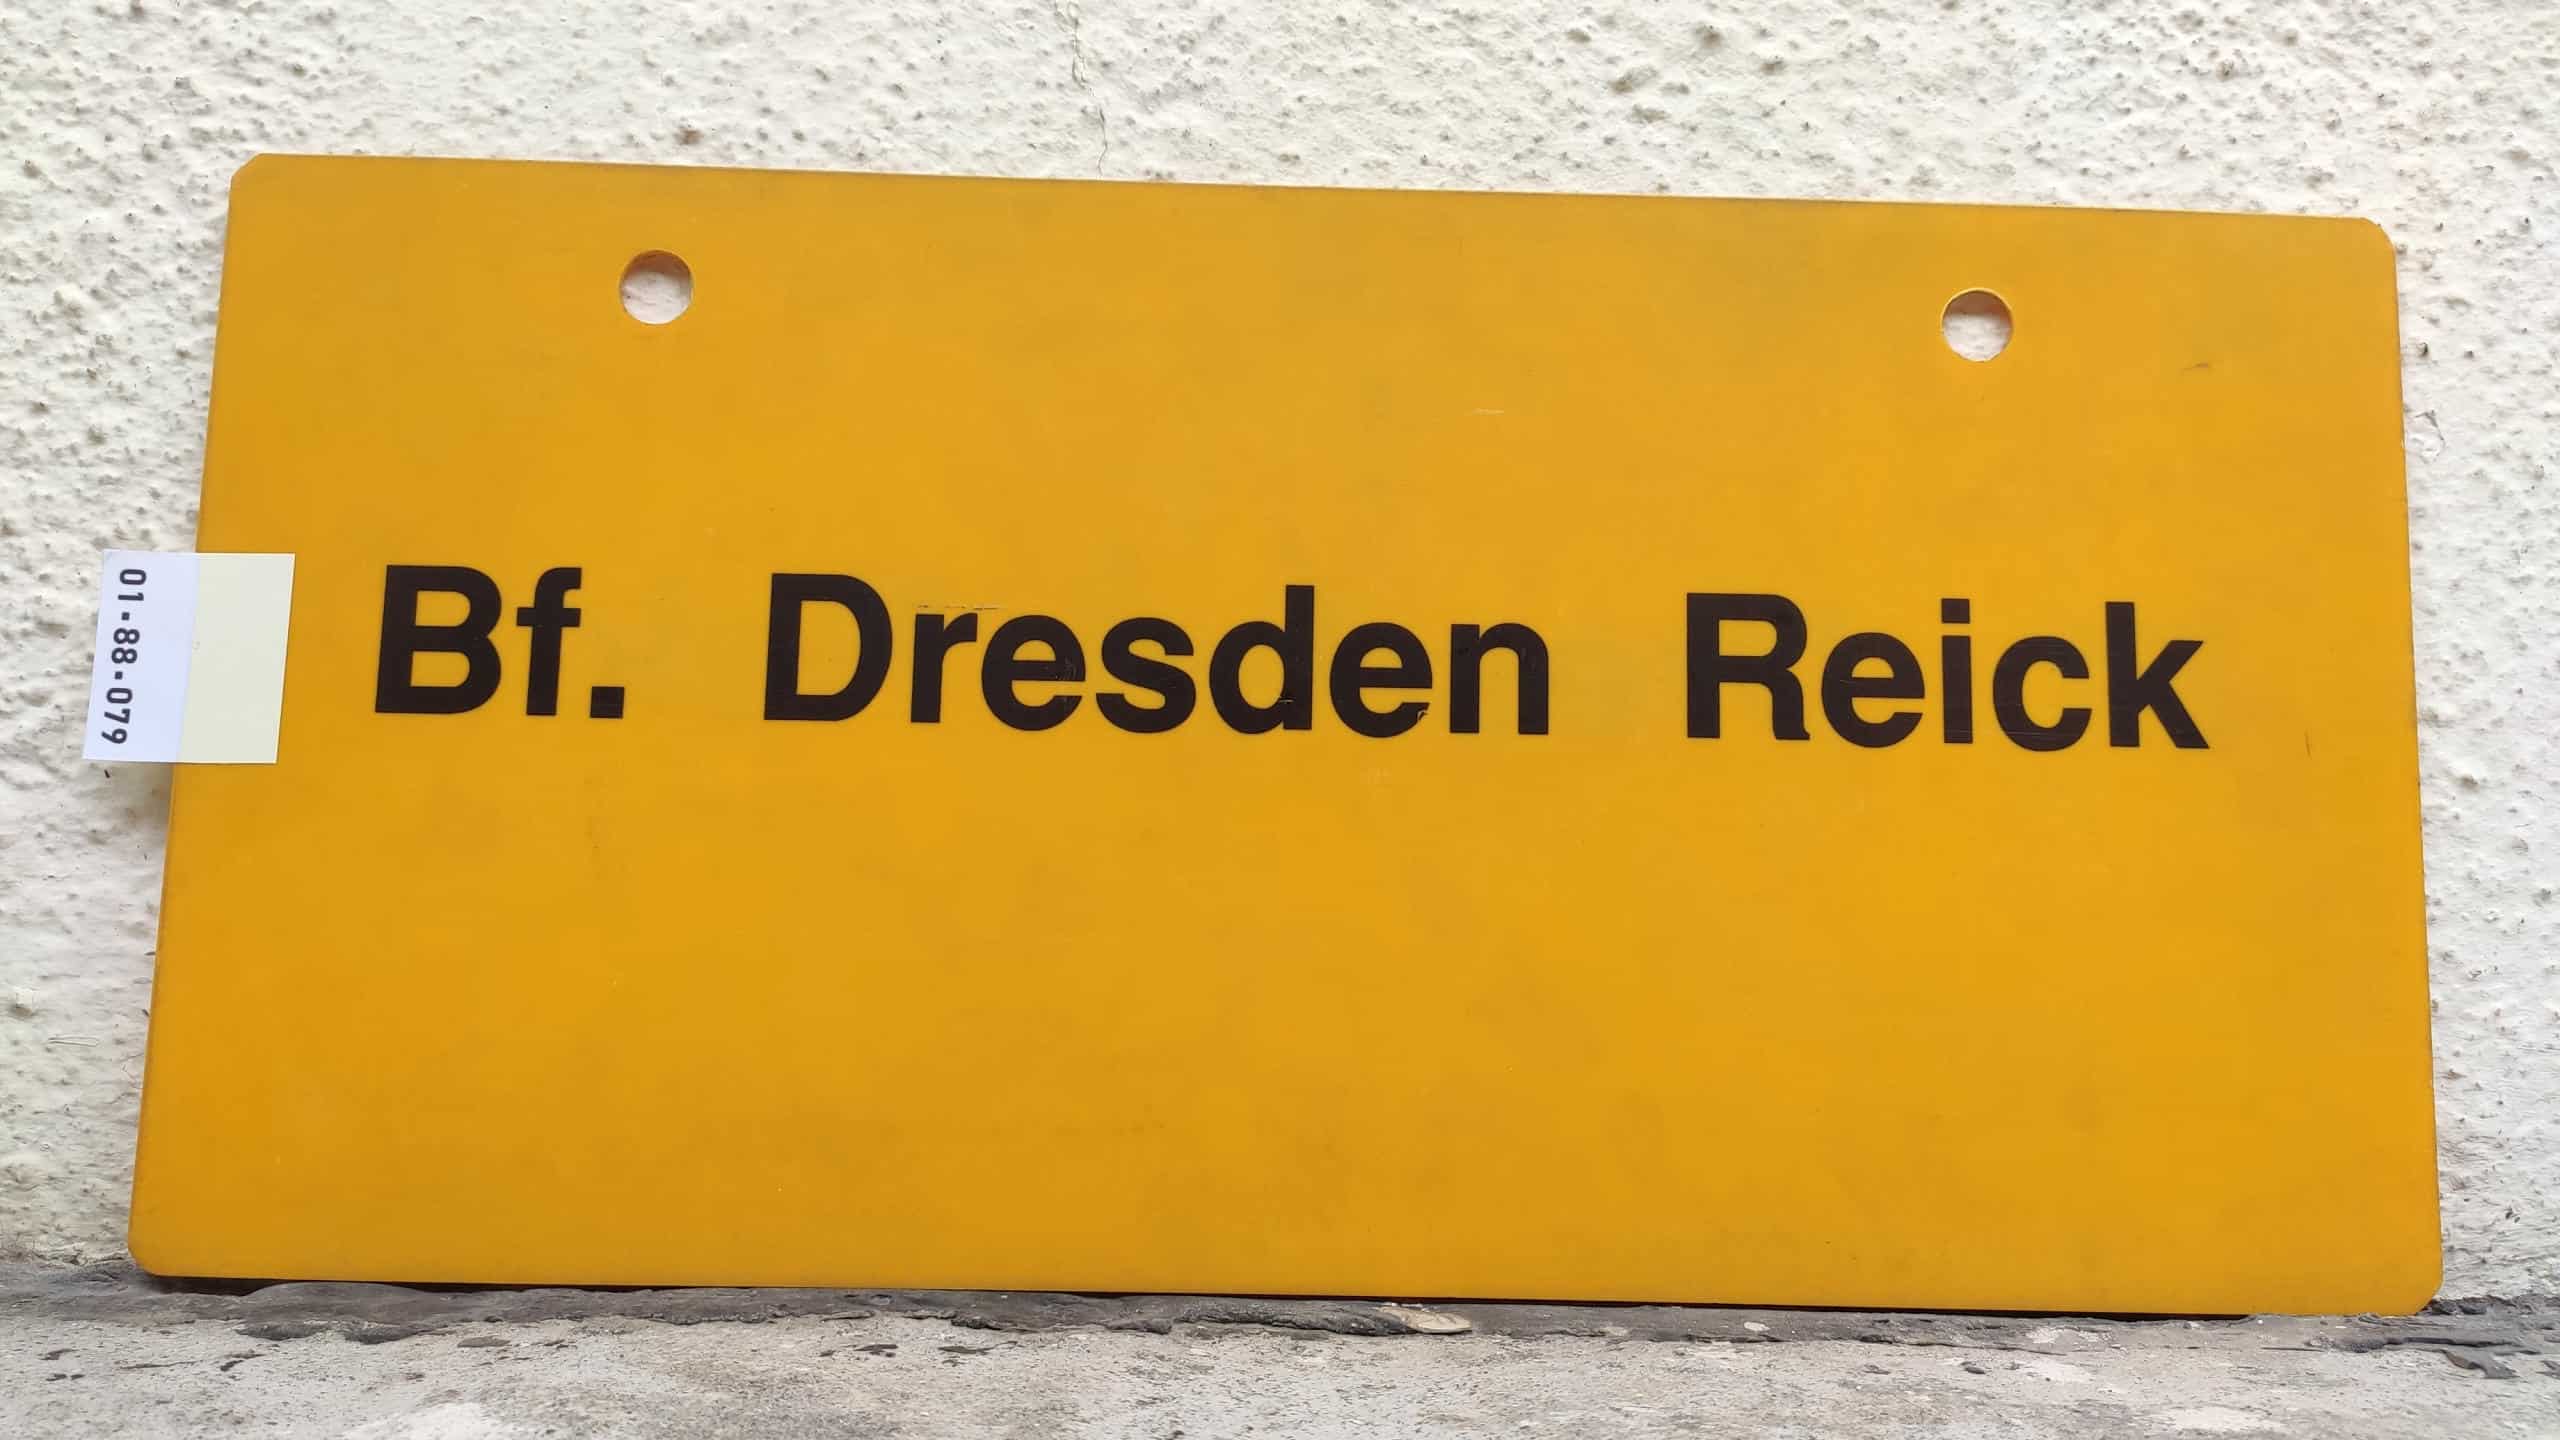 Bf. Dresden Reick